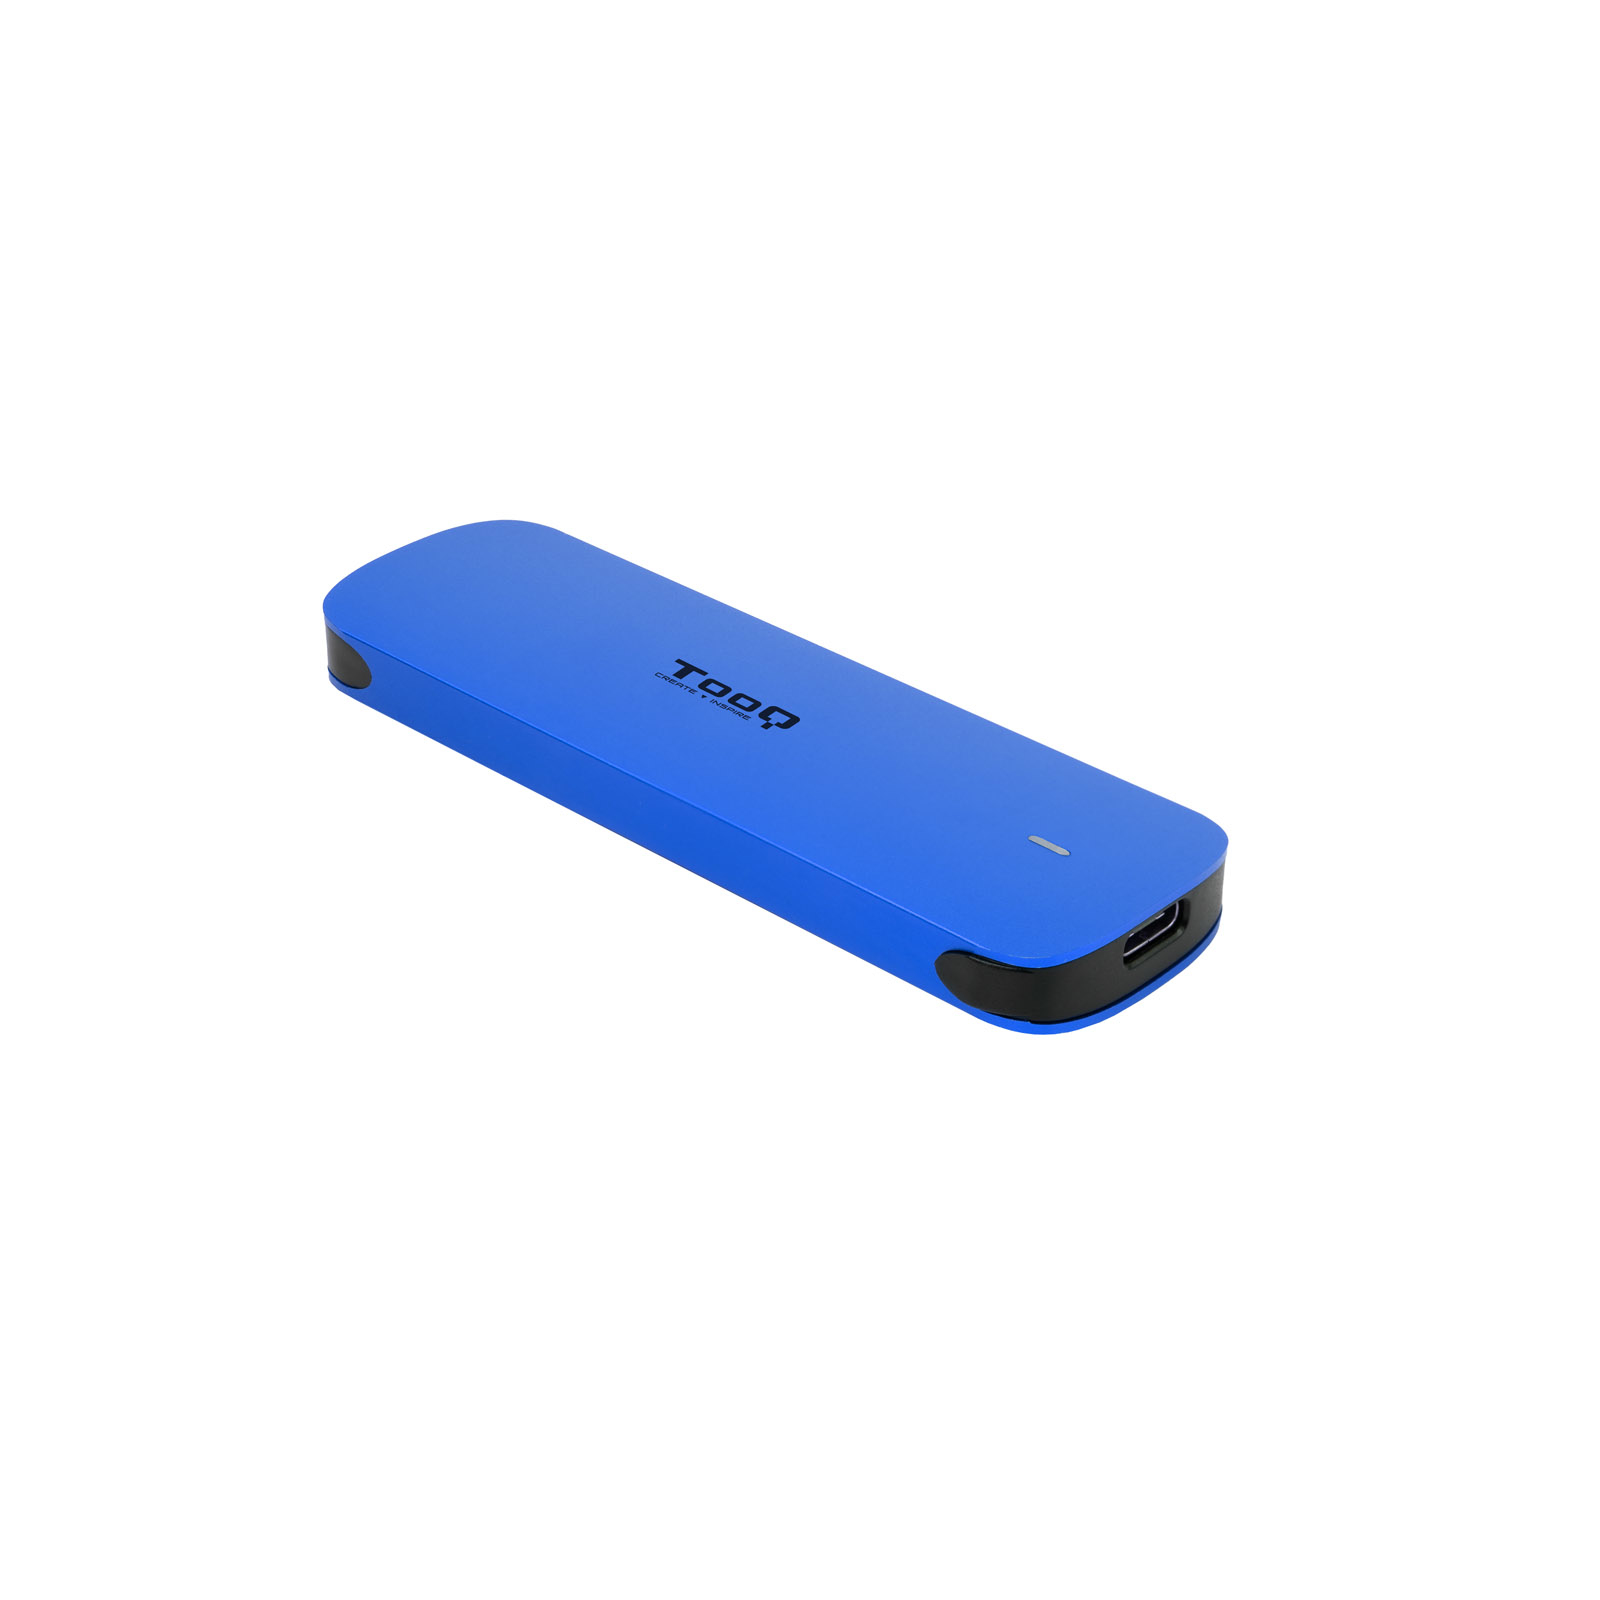 Caixa SSD Tooq M.2 NGFF/NVMe SSD USB 3.1 Gen 2 Aluminio Azul